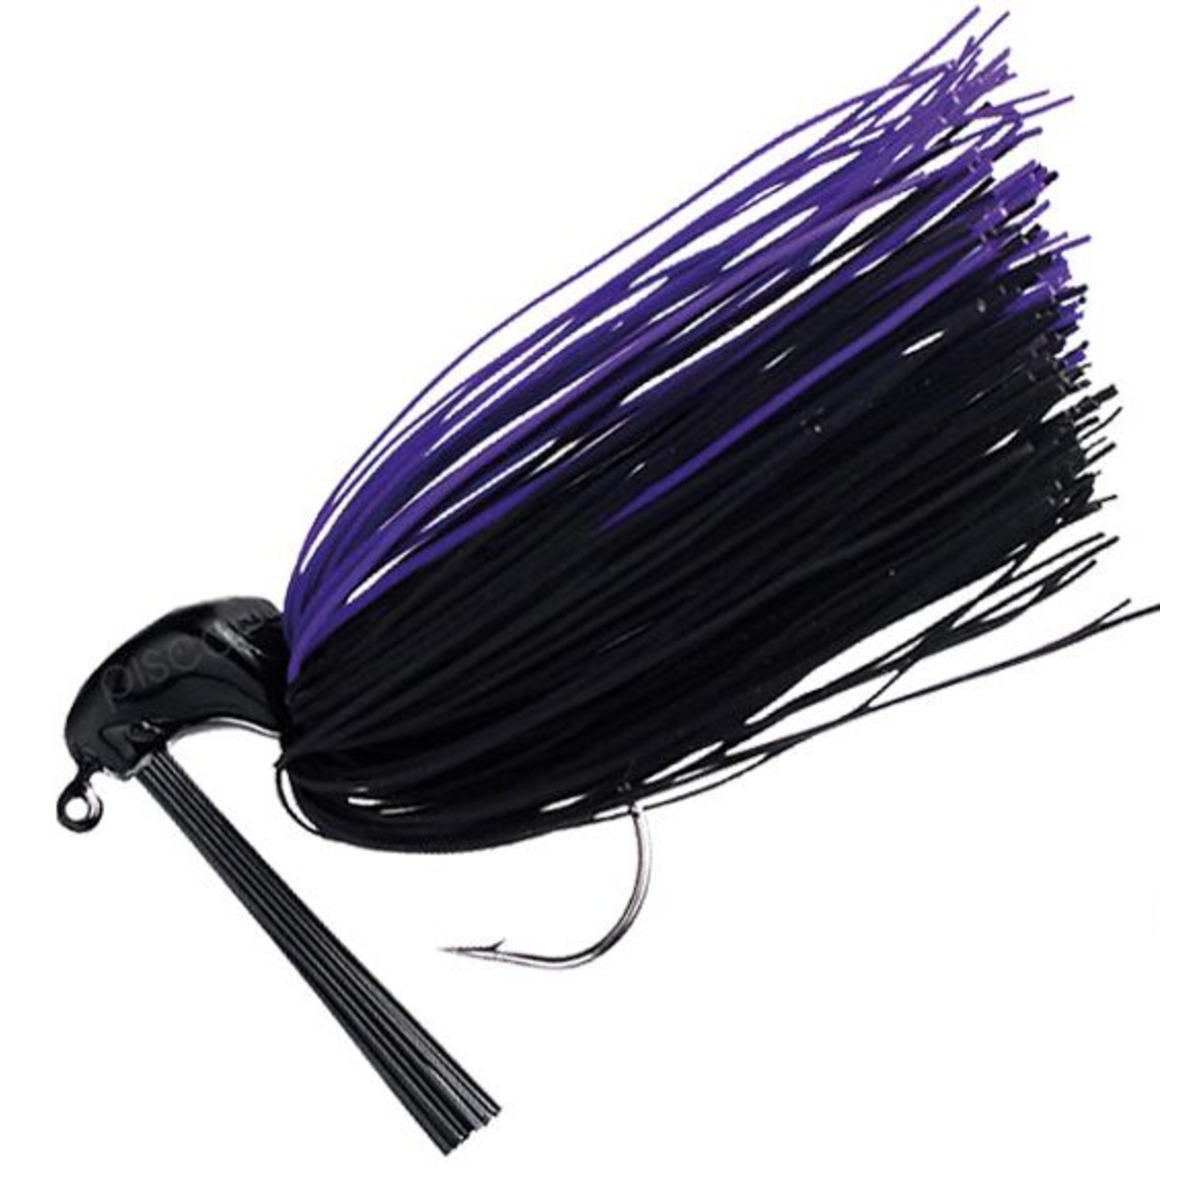 Seika Jig - 1-2 oz - Noir-Violet         